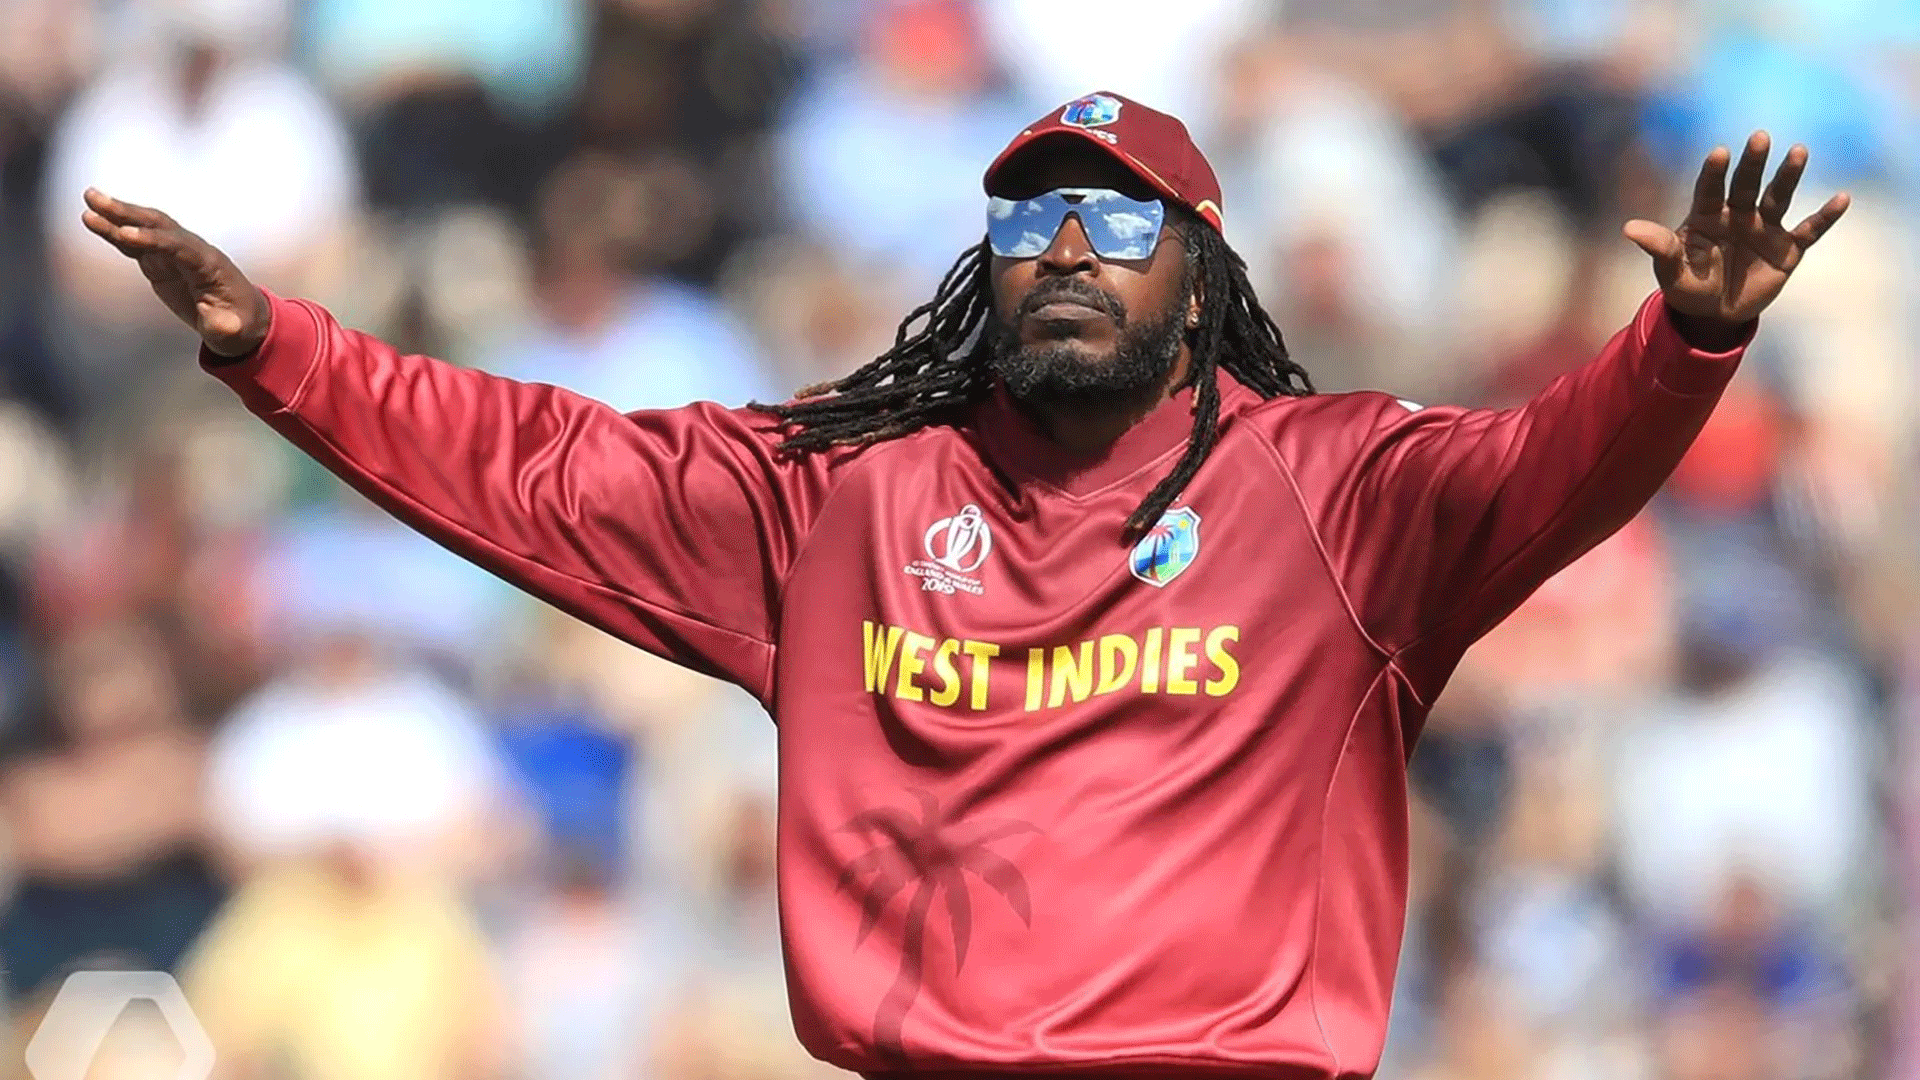 Legendary West Indies batsman Chris Gayle has announced to leave for Pakistan